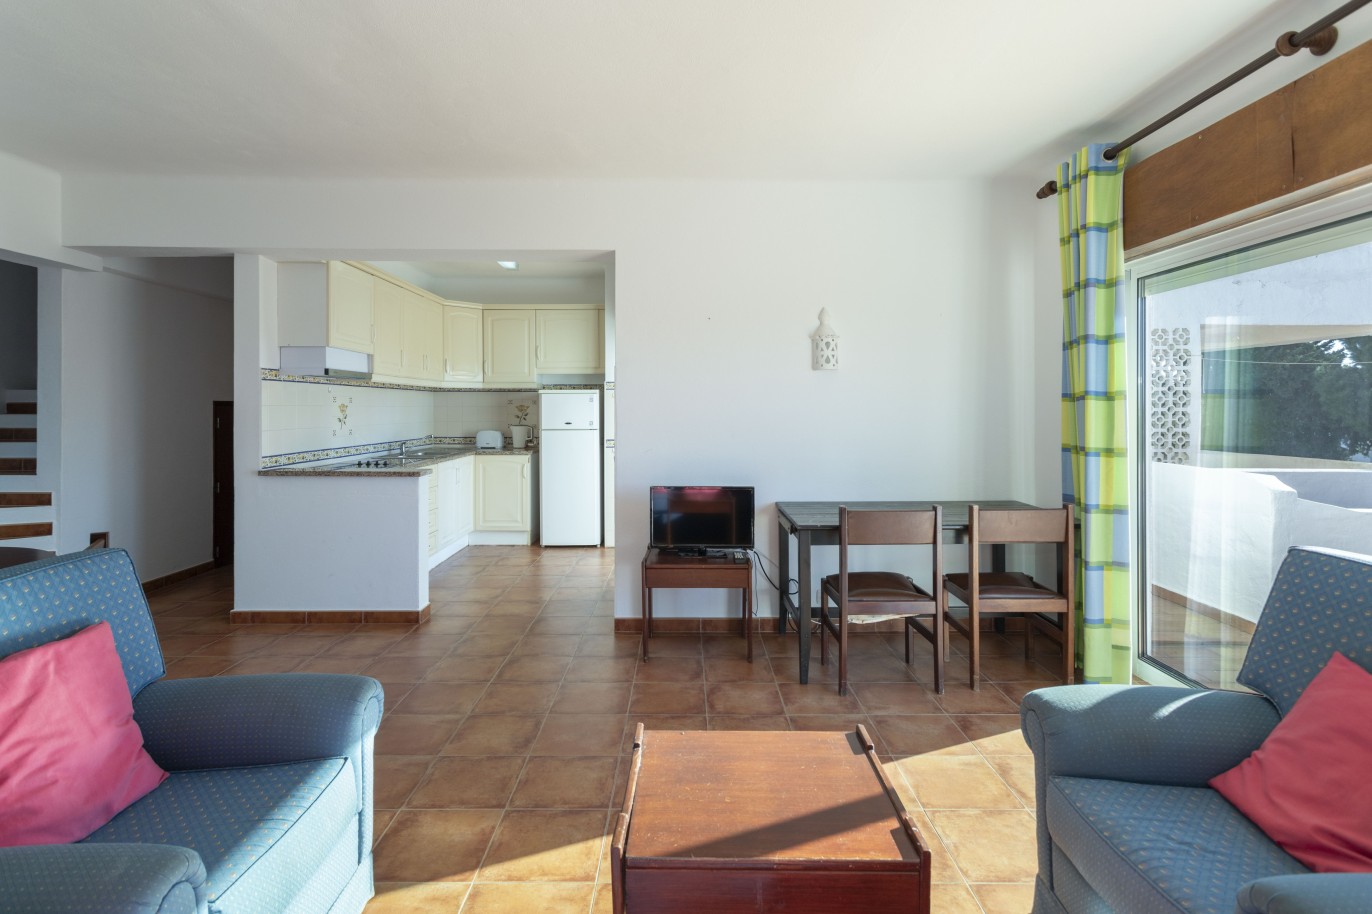 2-bedroom Apartment Duplex, sea view, for sale in Porches, Algarve_247747